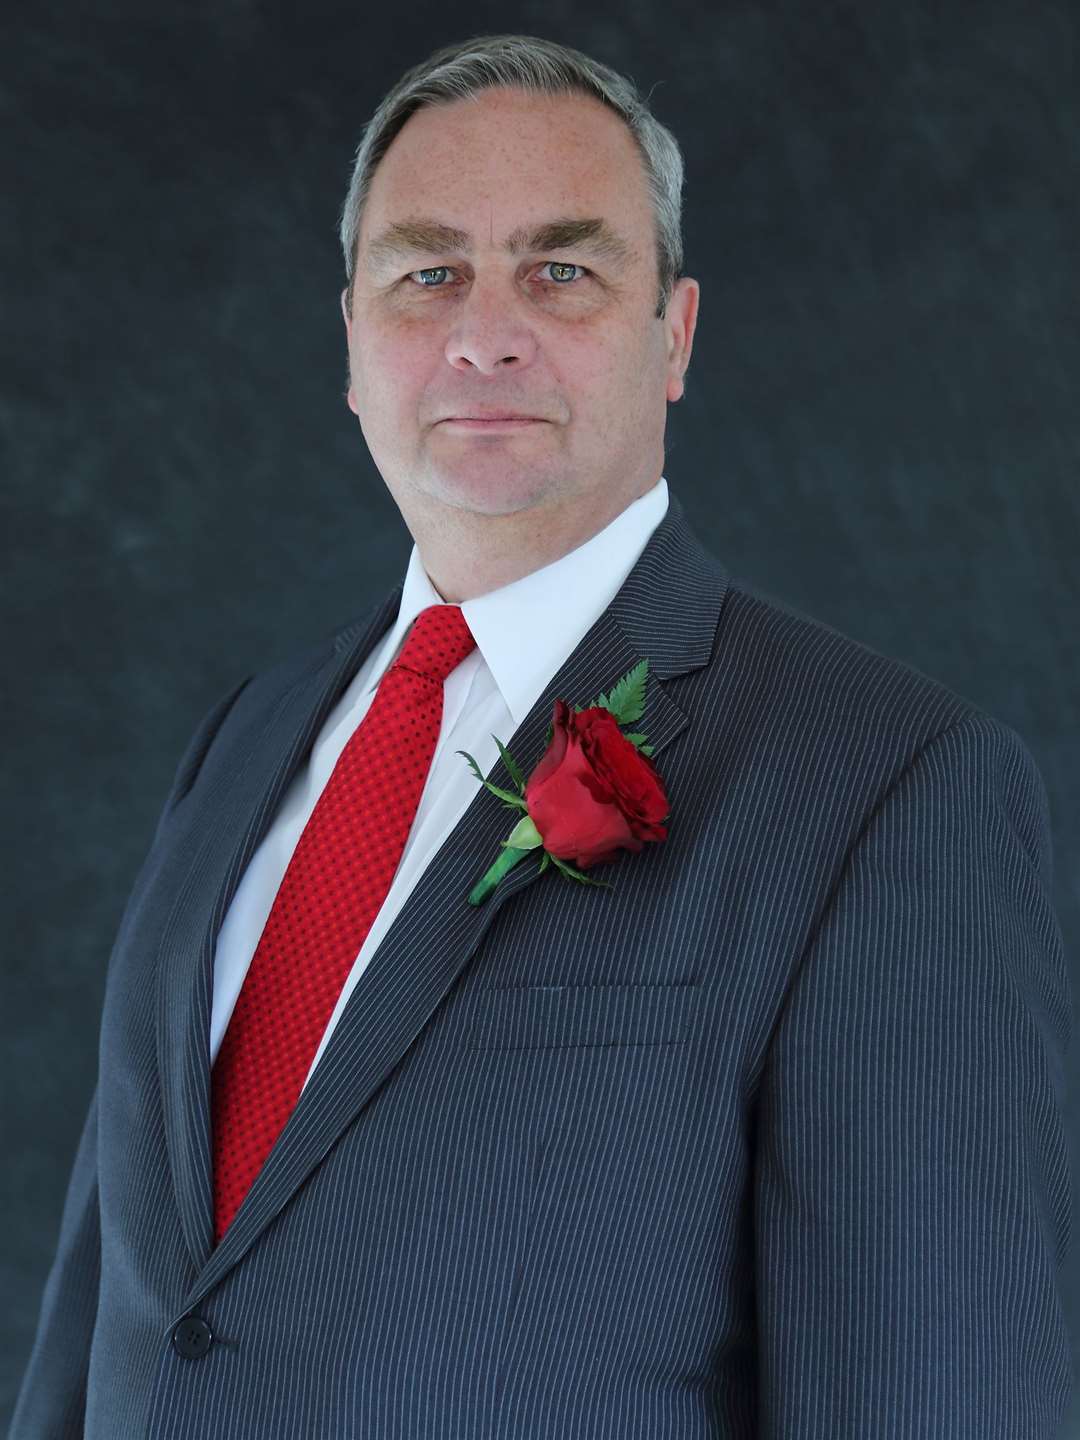 Cllr John Burden from Gravesham Borough Council